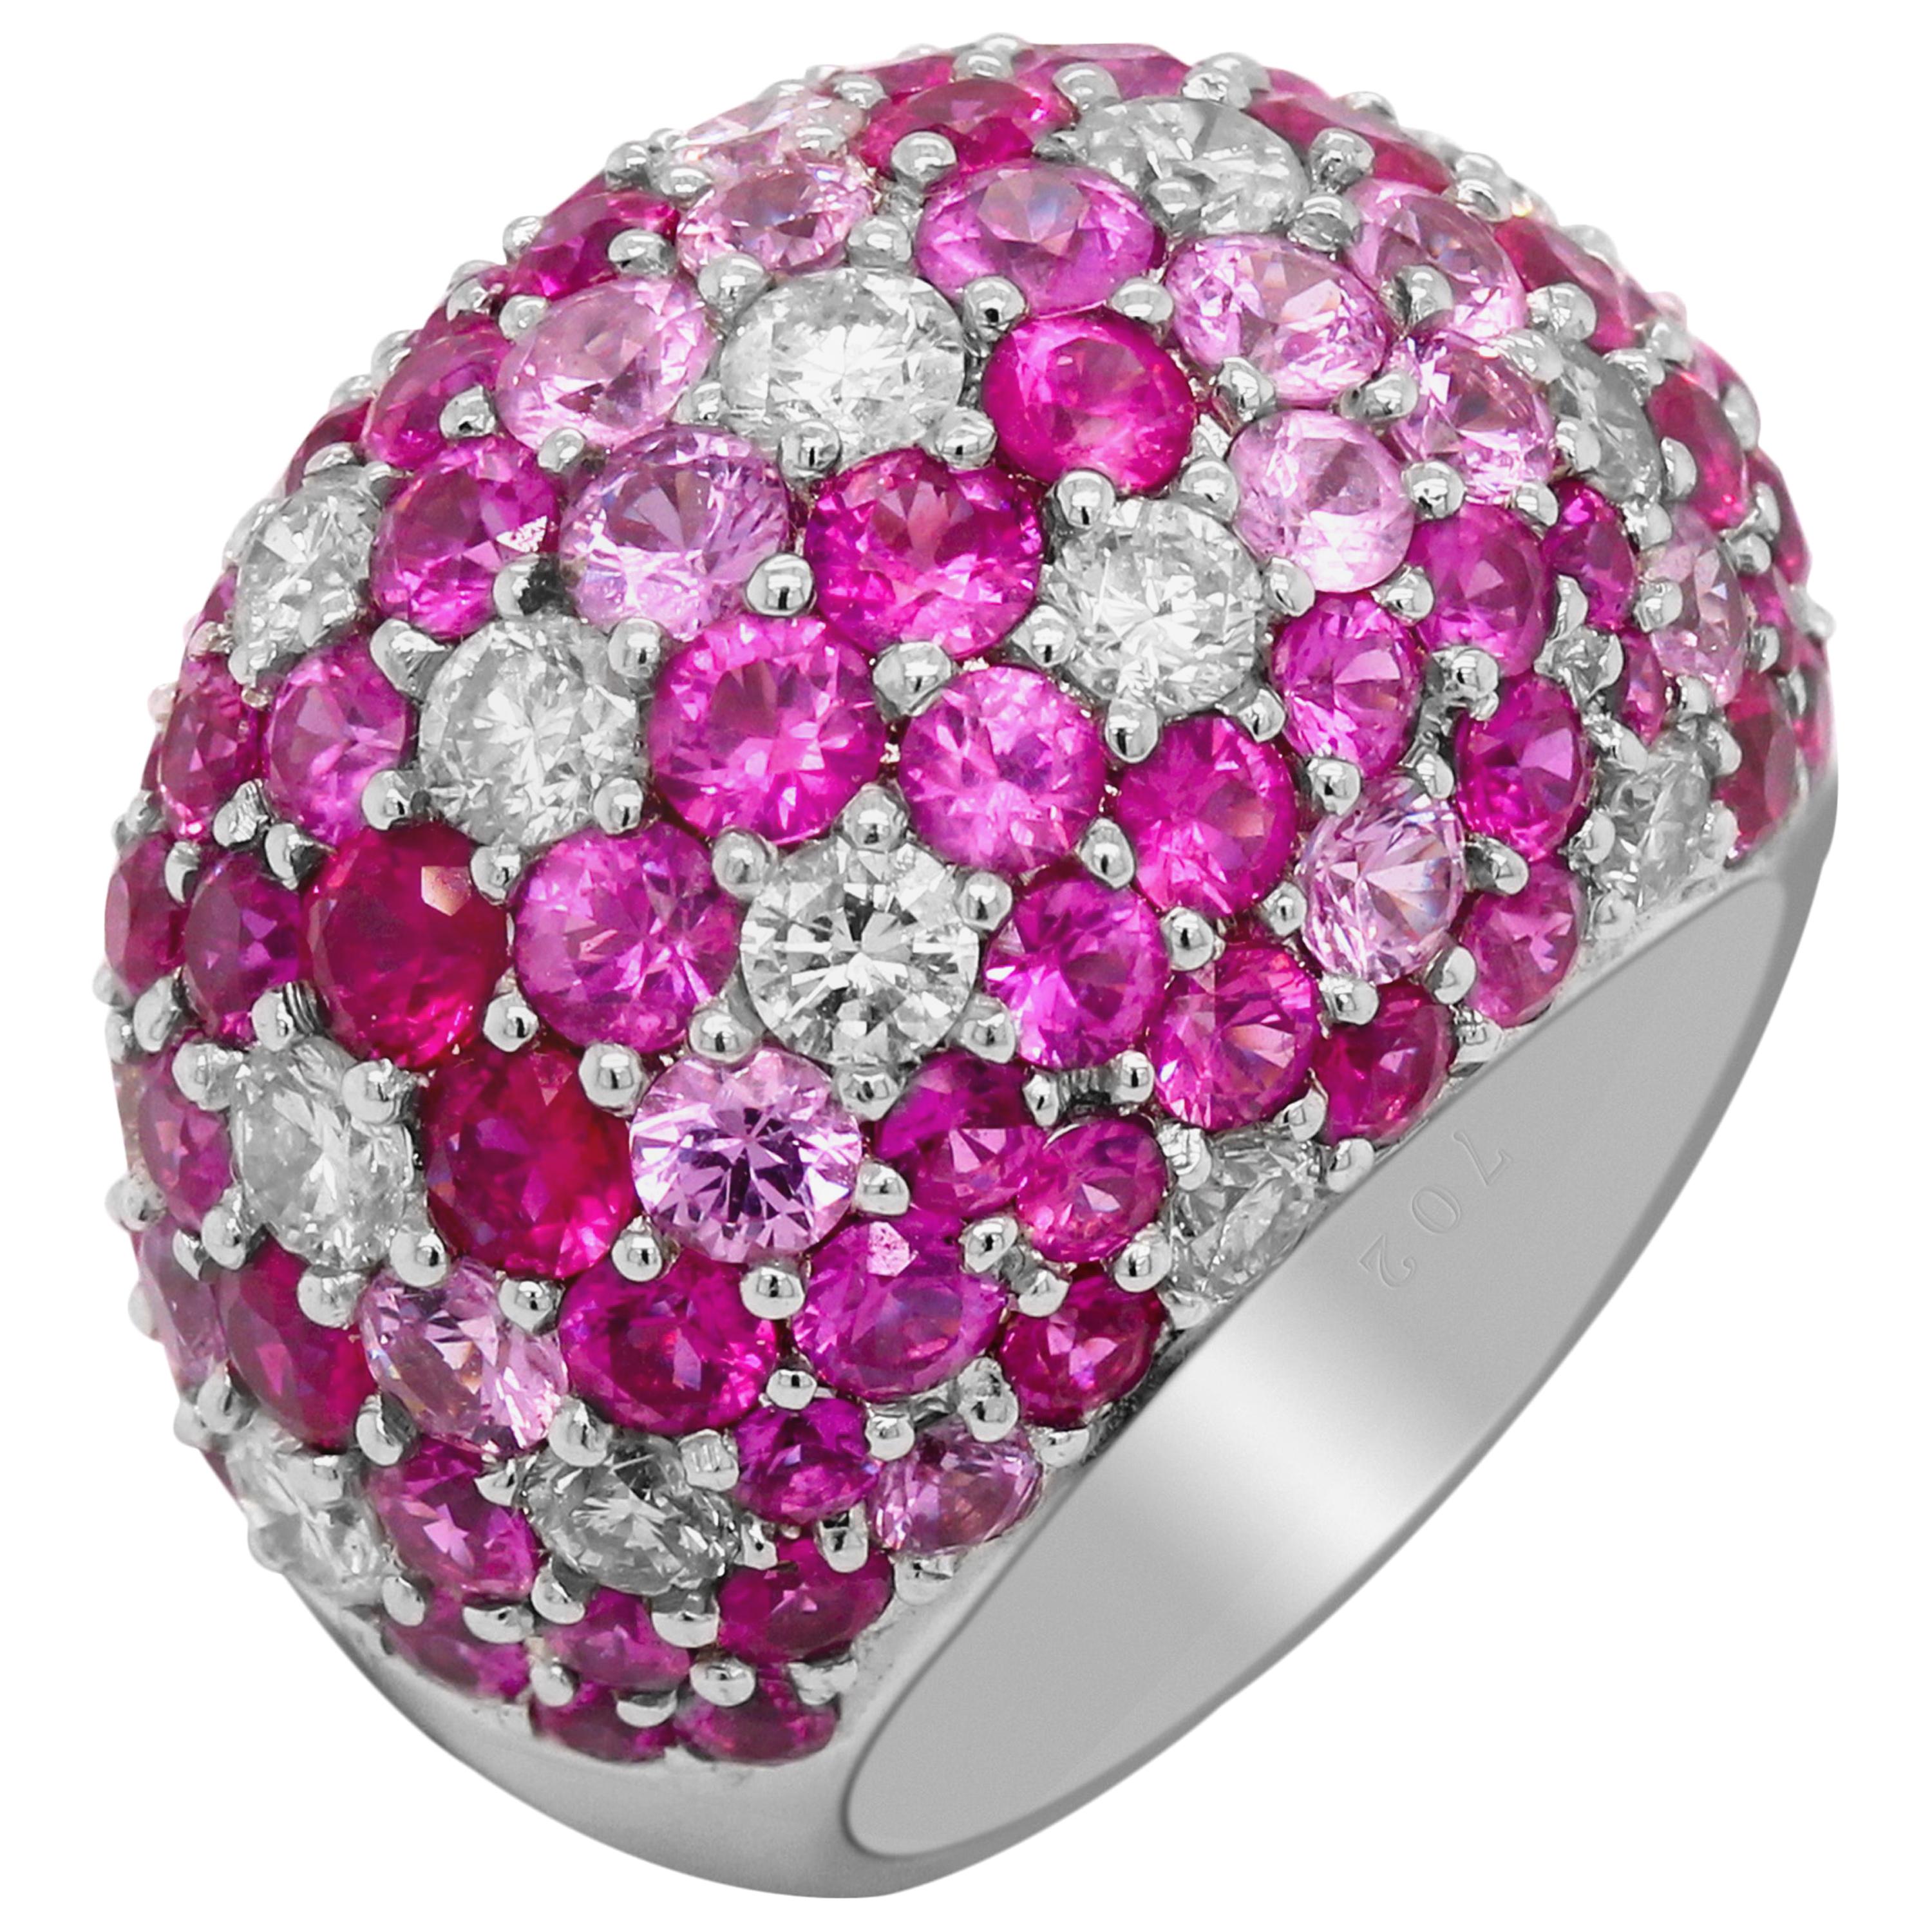 Shaded Pink Sapphires Diamonds 18 Karat White Gold Dome Ring